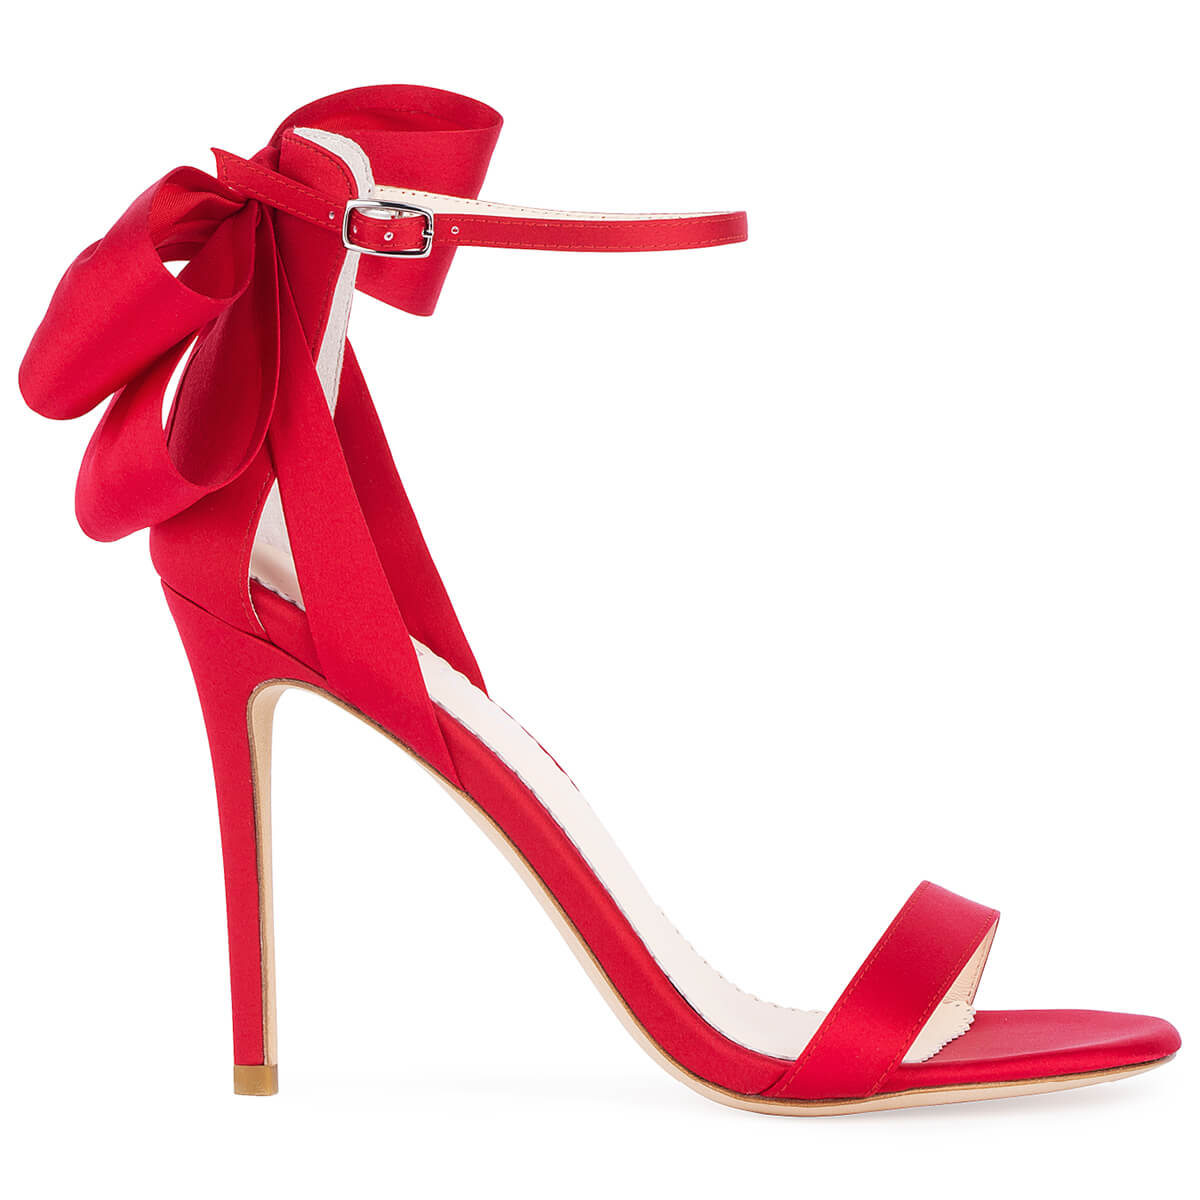 Ankle Strap Shoe 4.25 Inch Heel -Black, Red, White – RedNeckWear